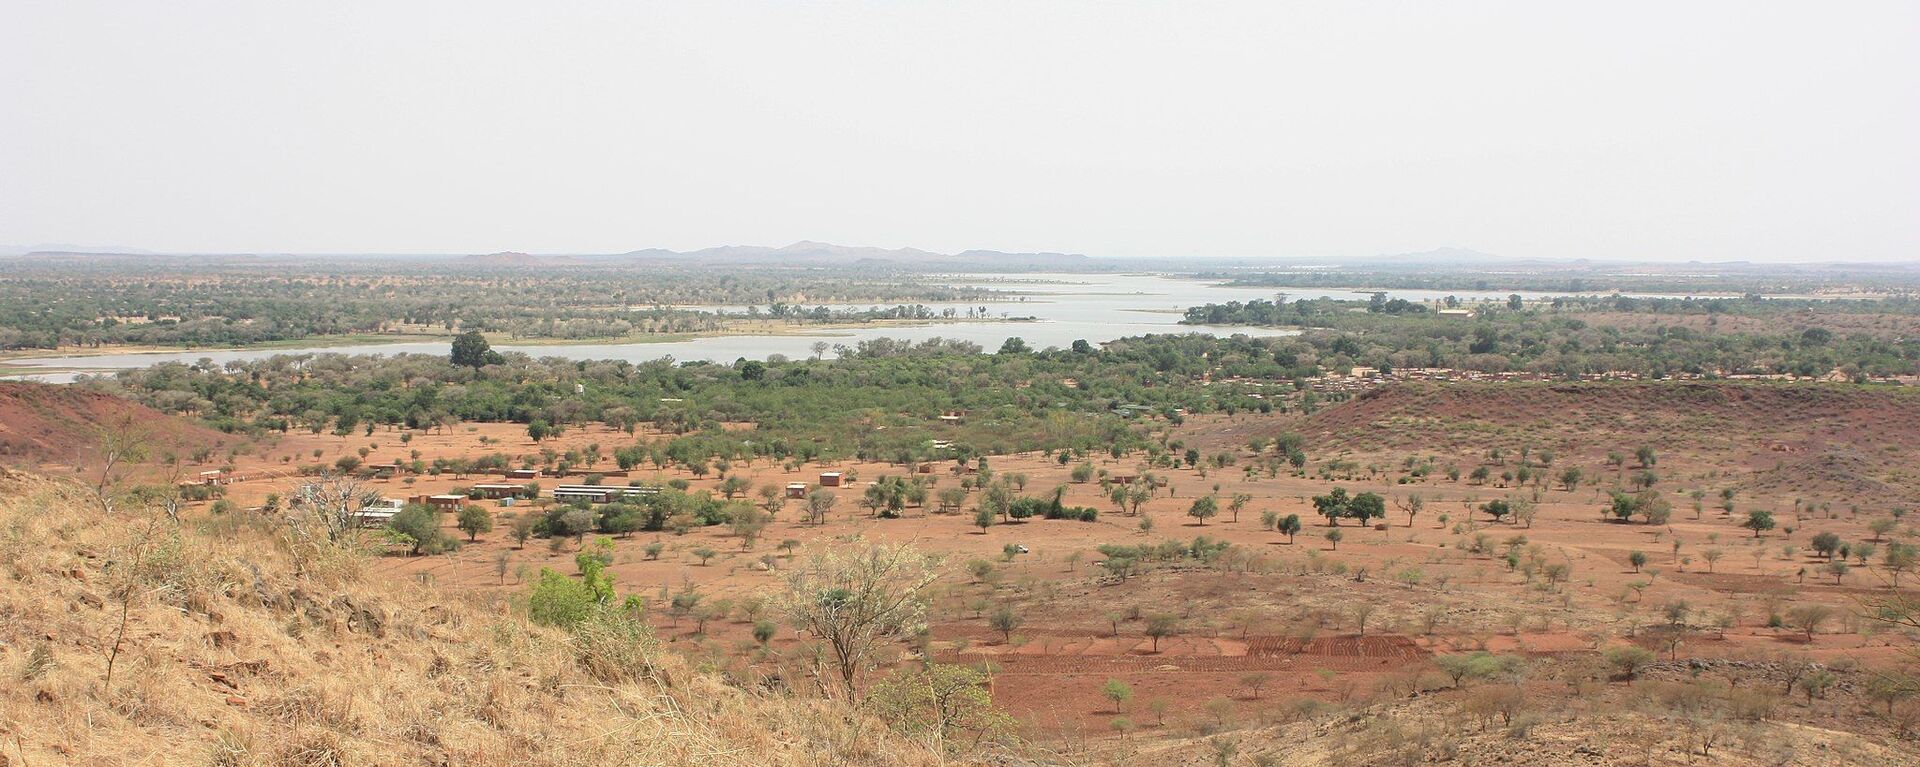 Lac de Bam, Burkina Faso - Sputnik Afrique, 1920, 05.10.2021